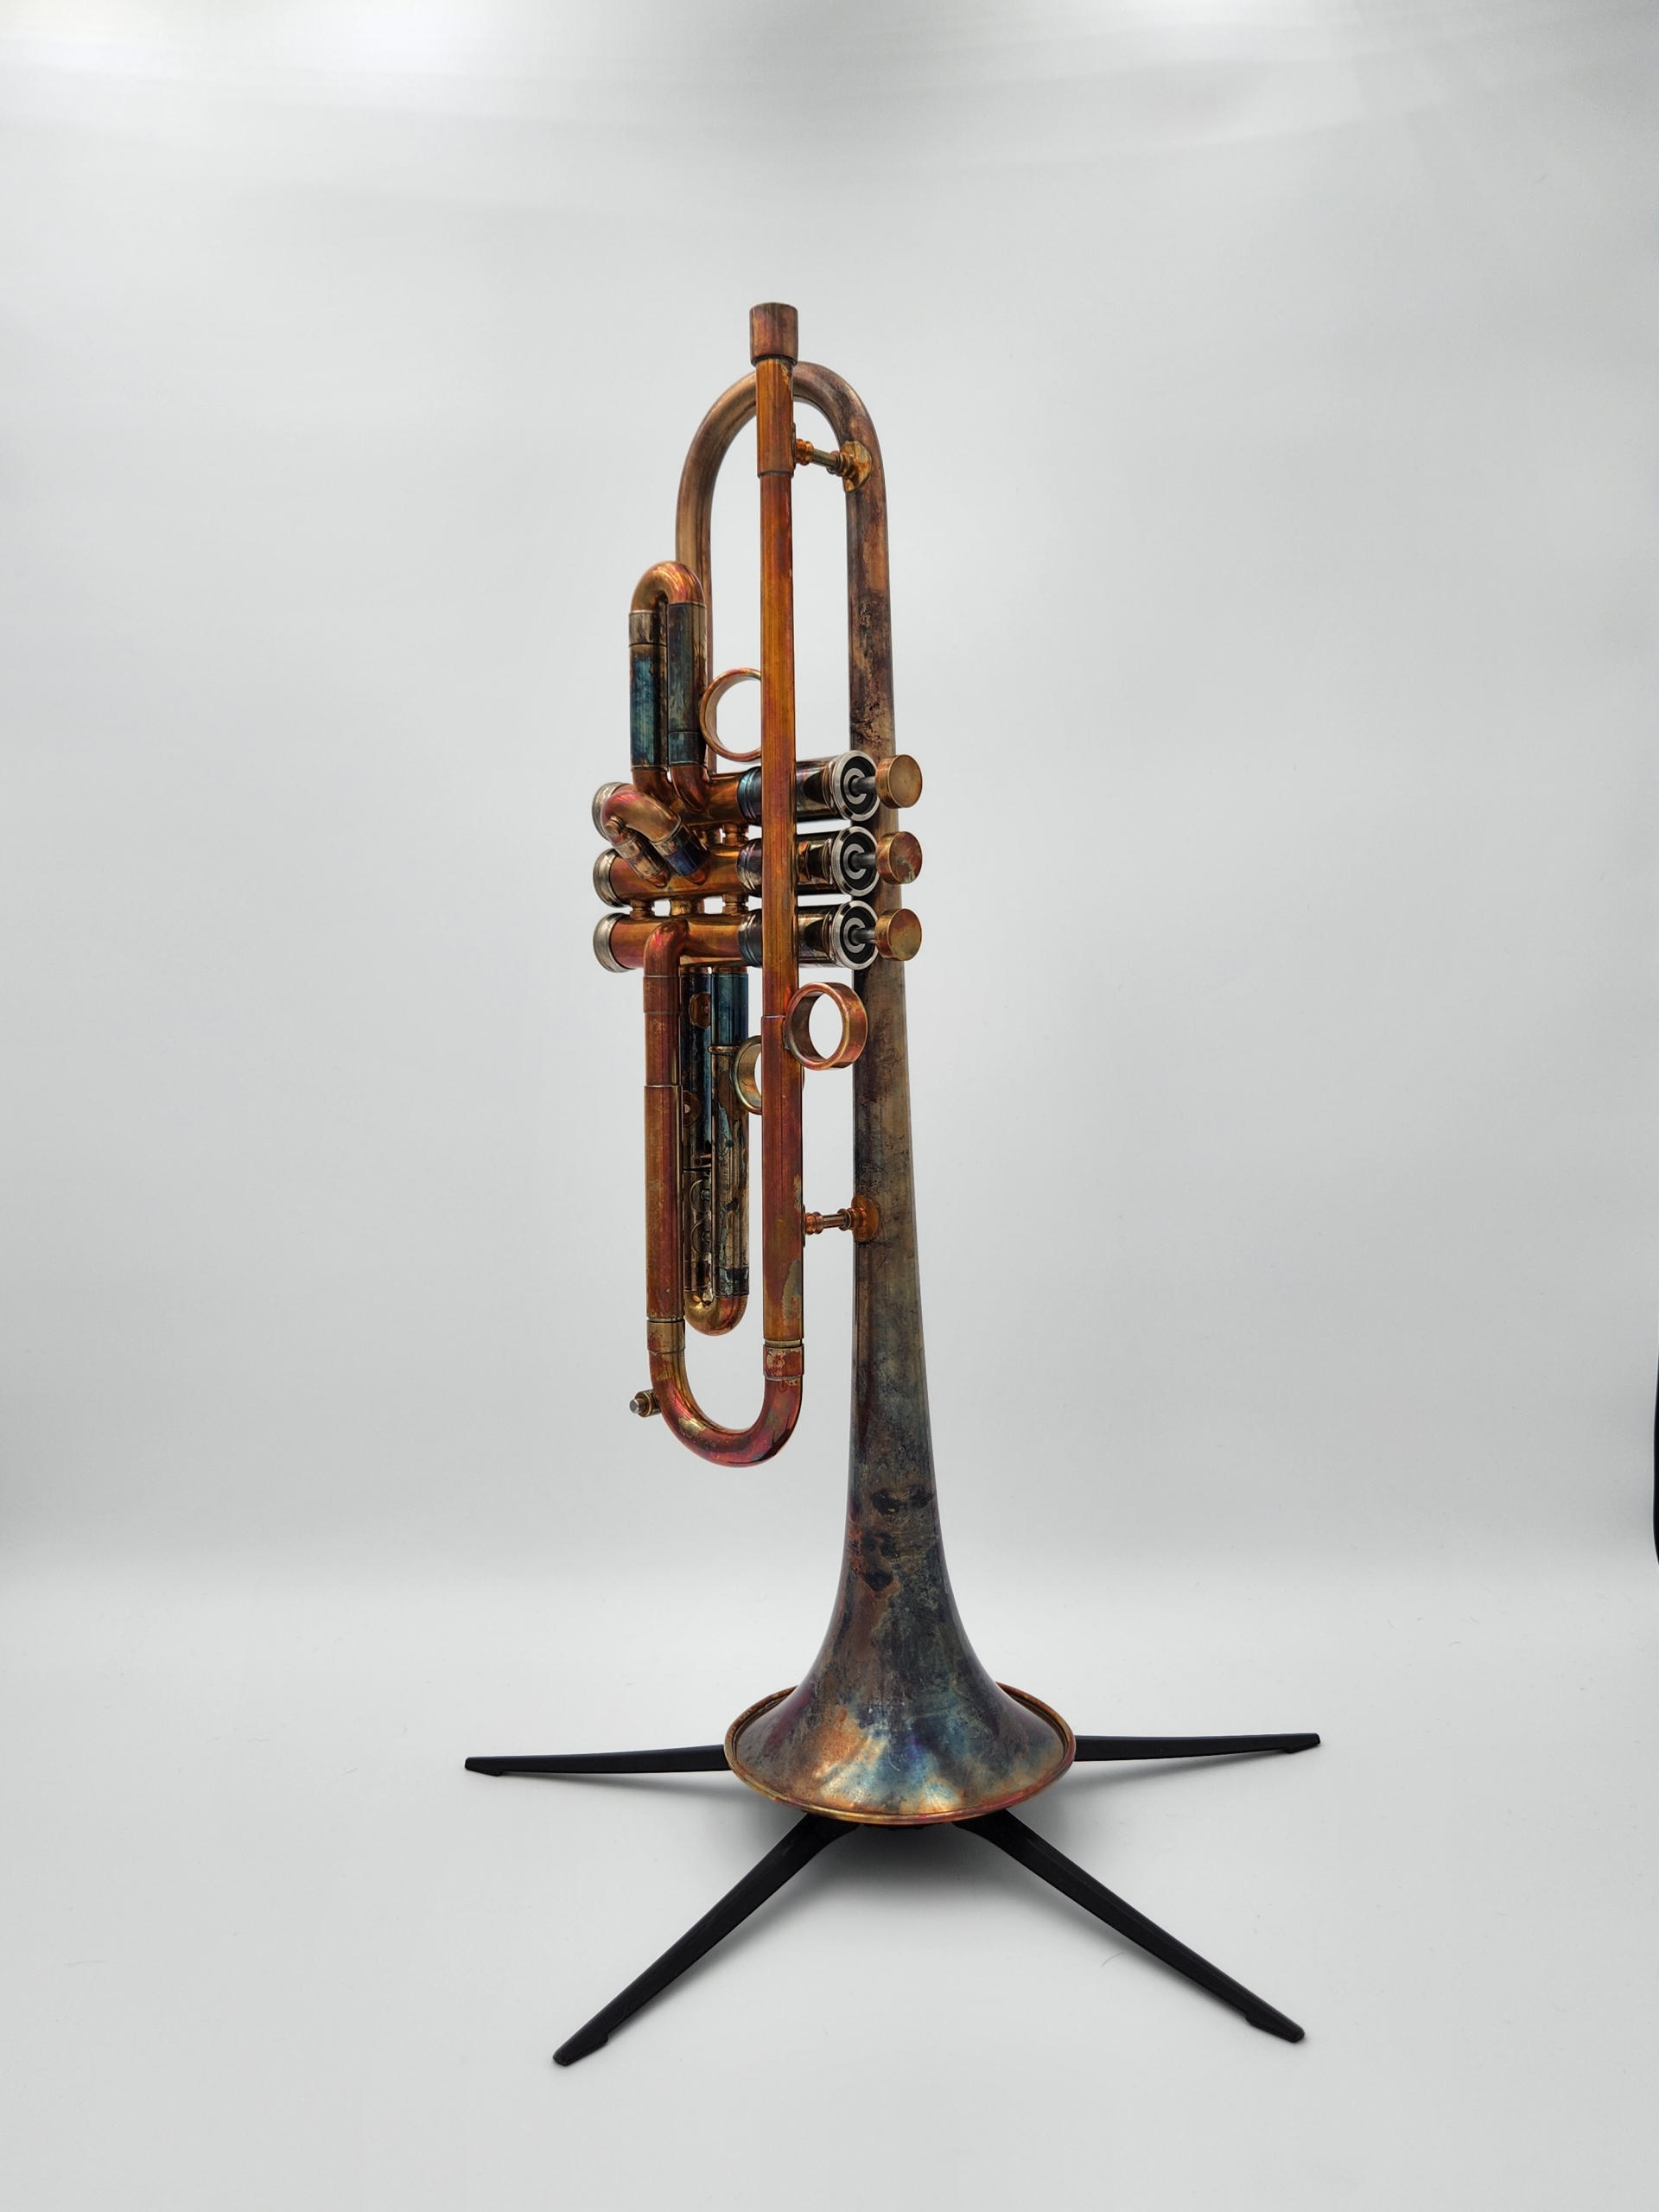 Del Quadro Custom AJ Grizzly trumpet with a 'F It' acid finish